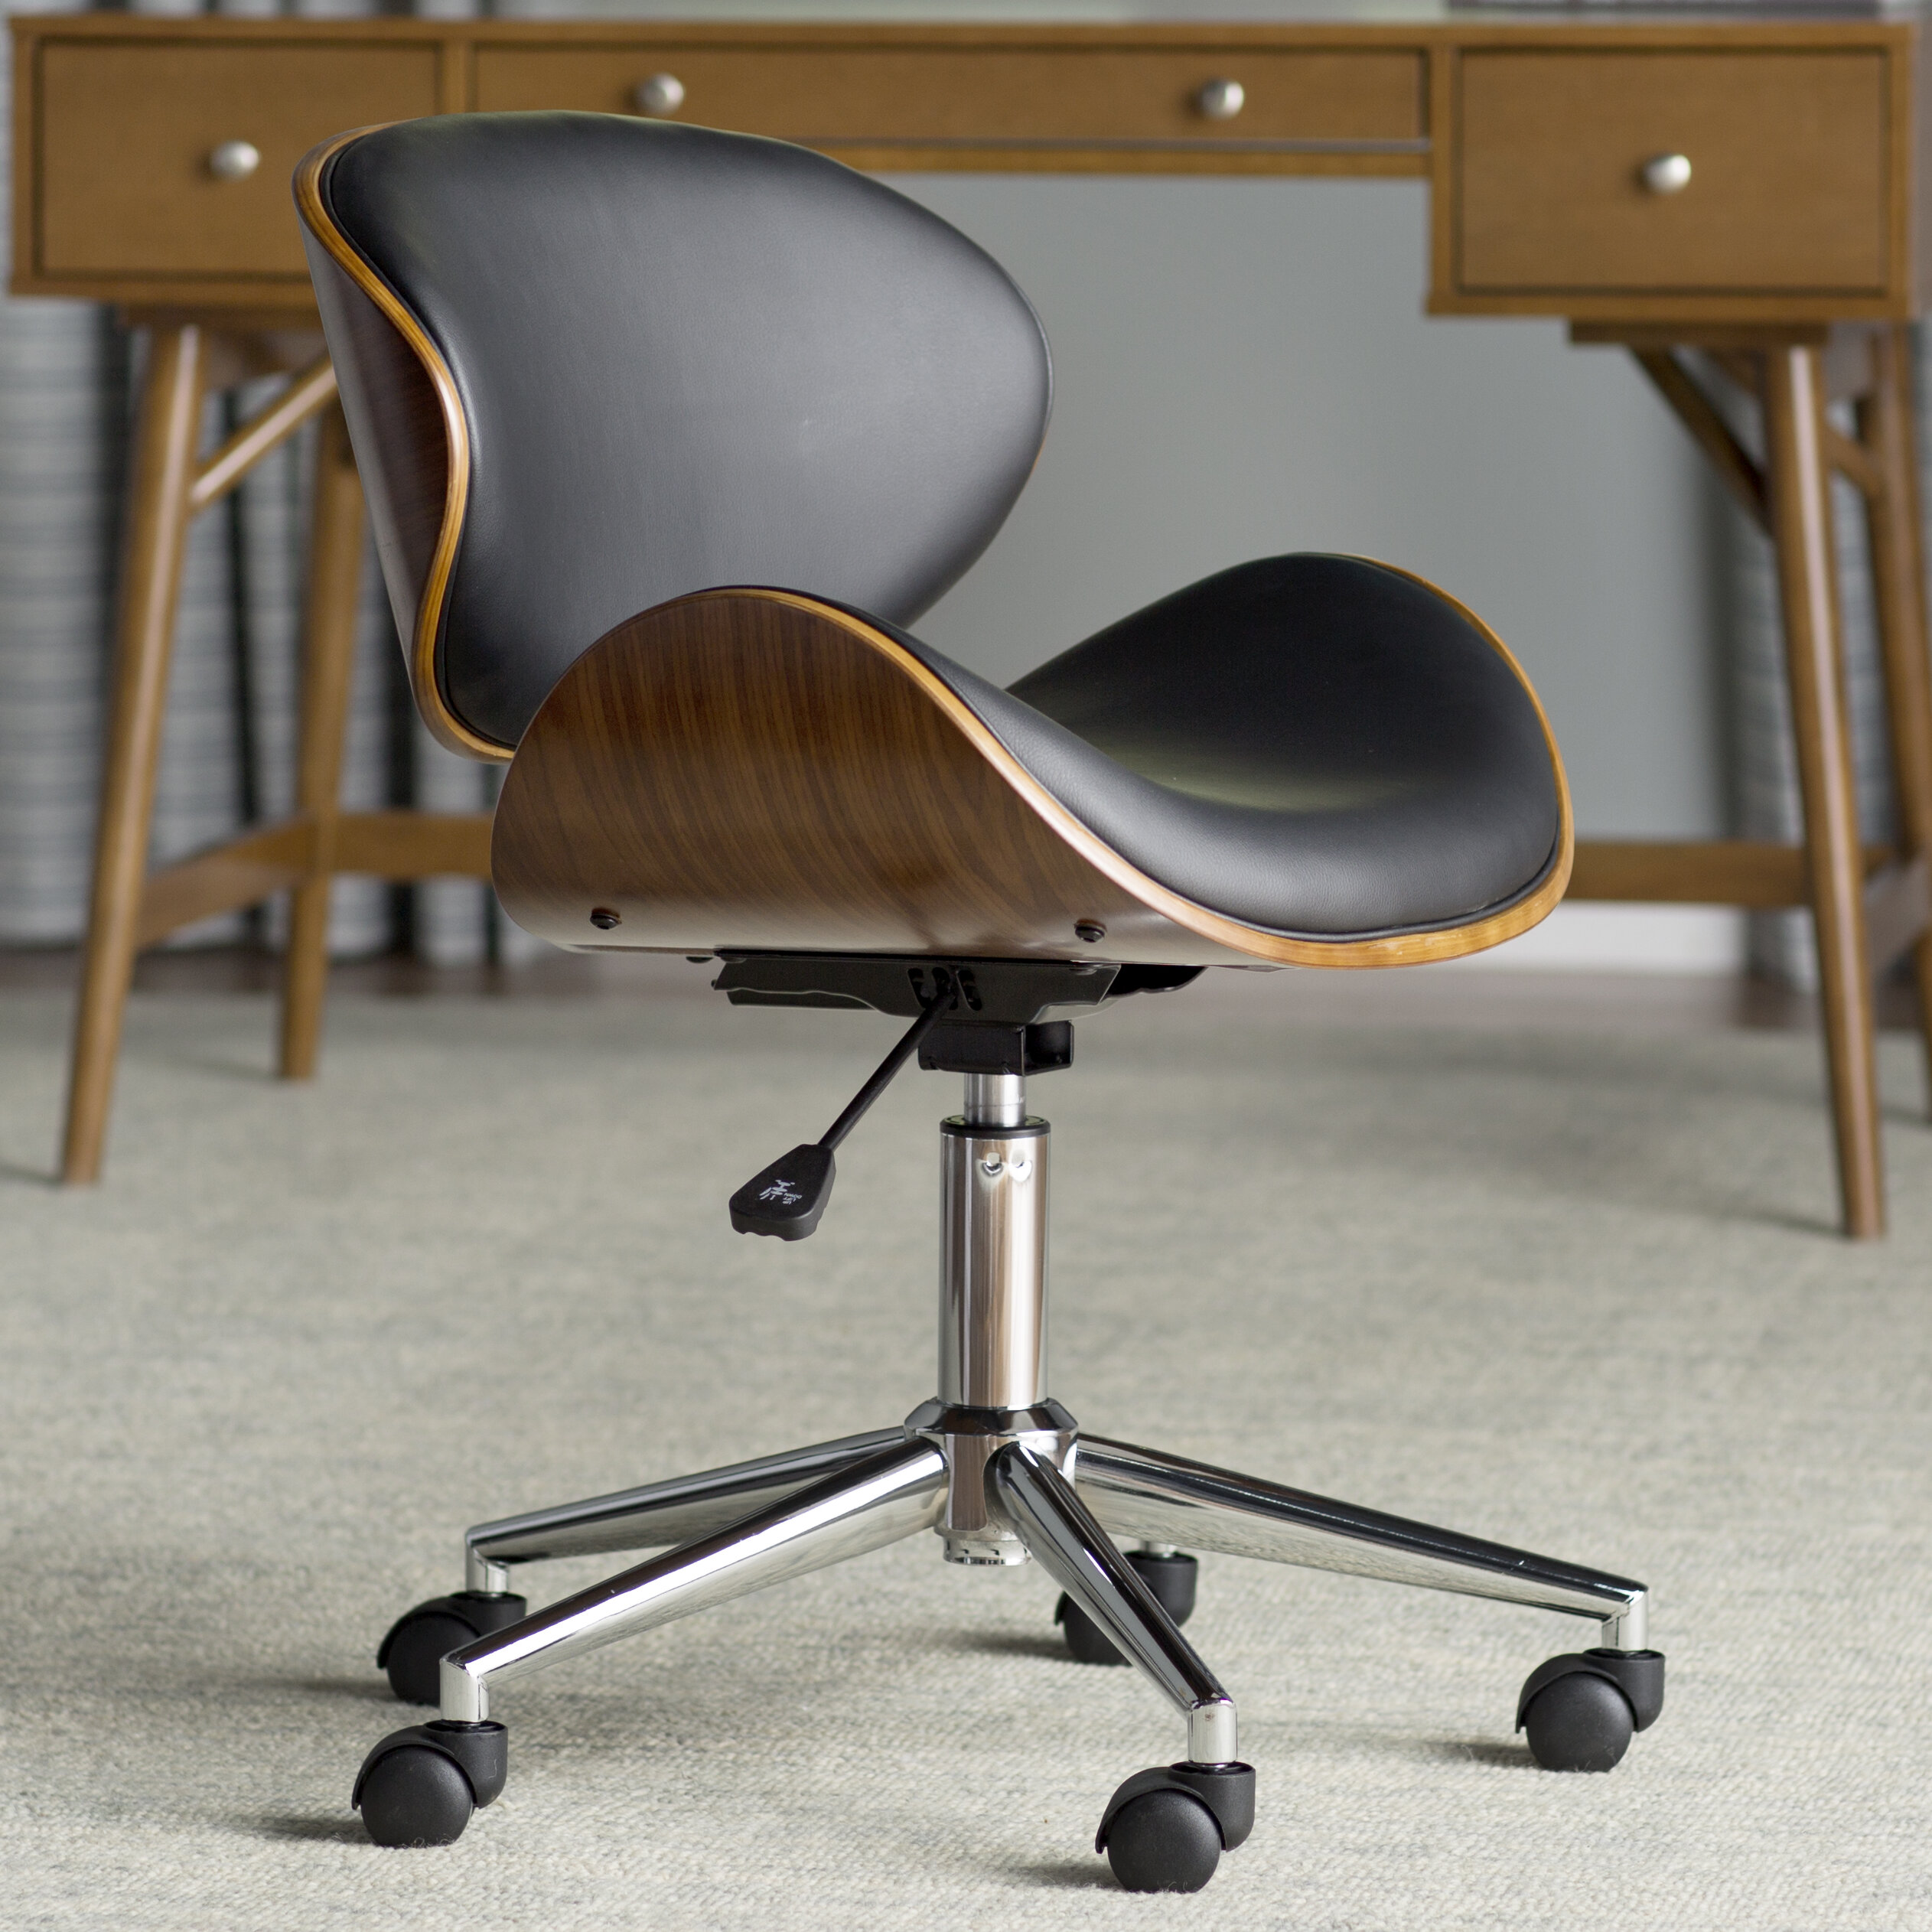 Стул на колесиках Alessa Upholstered Desk Chair - Restoration Hardware.